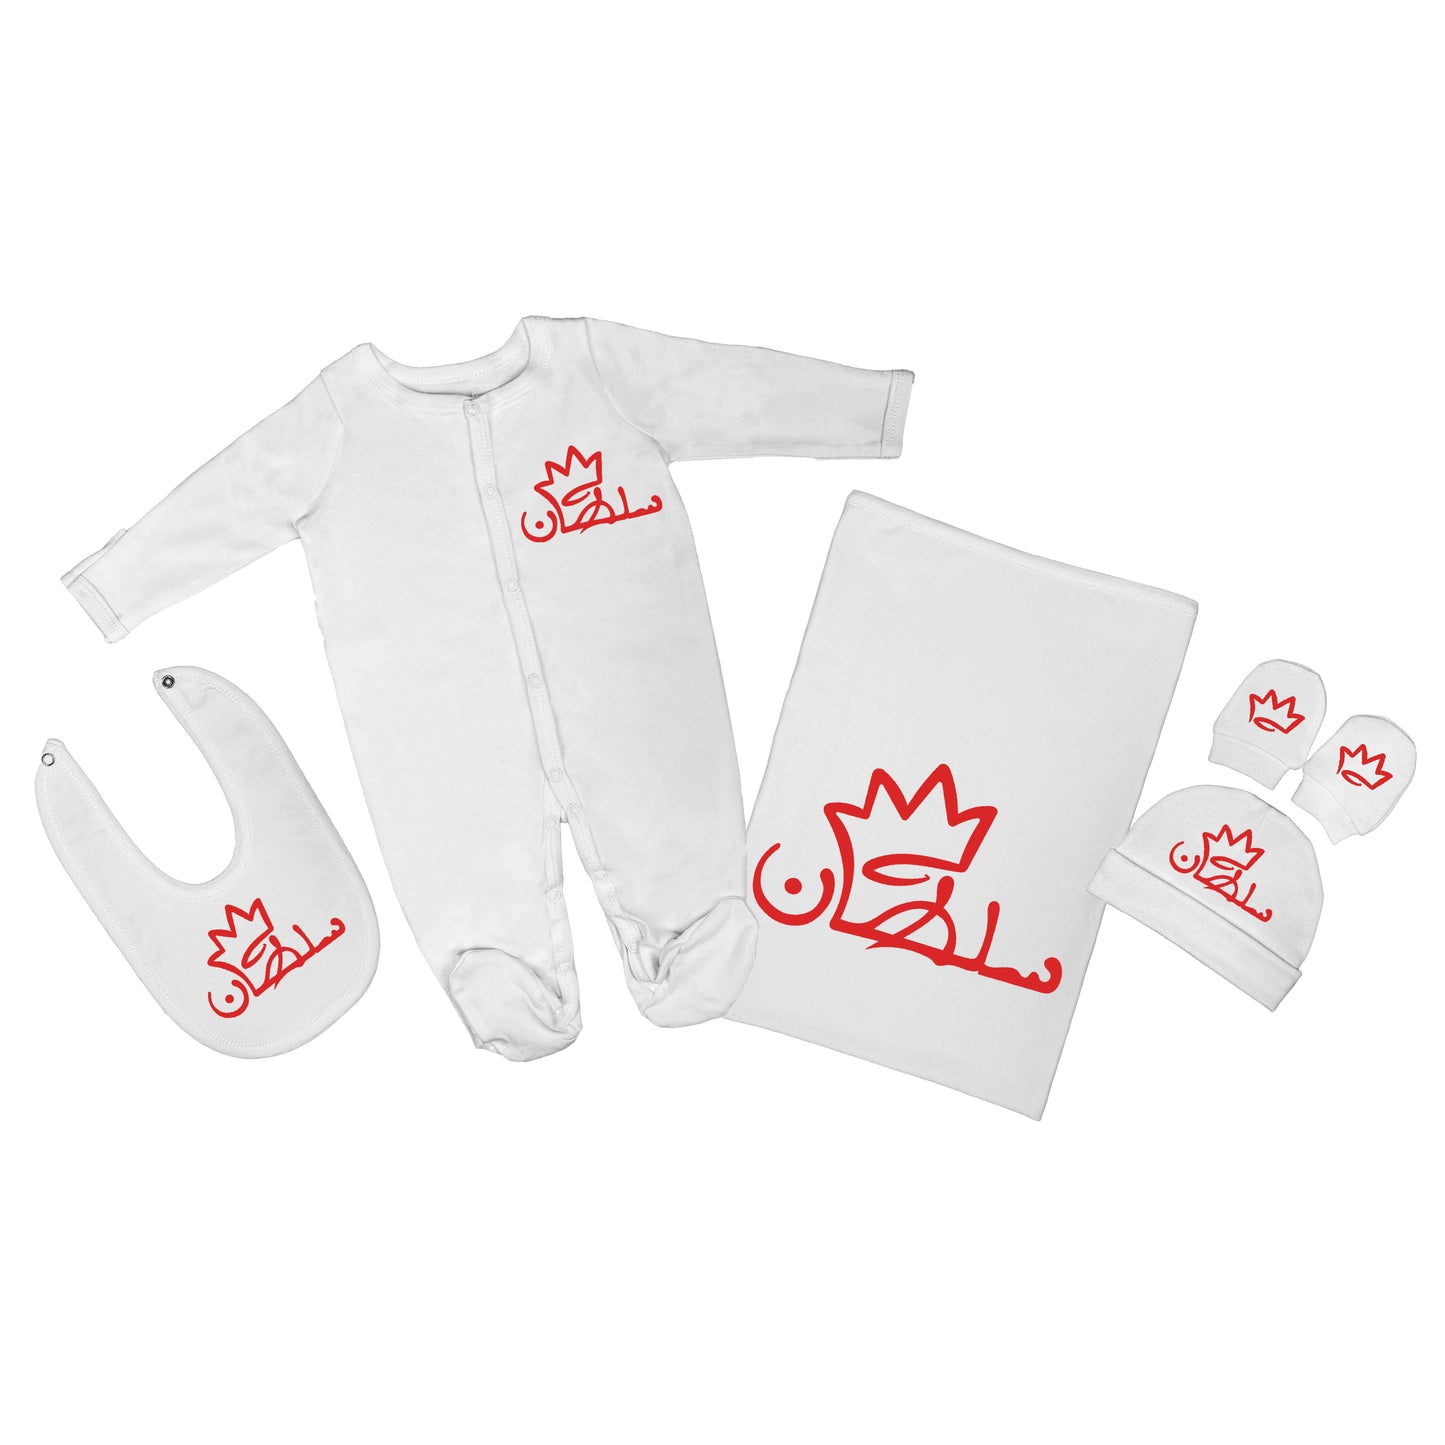 Personalized Baby Clothing Set (Blanket, Sleepsuit, Beanie, Bib, Mittens) - Prince